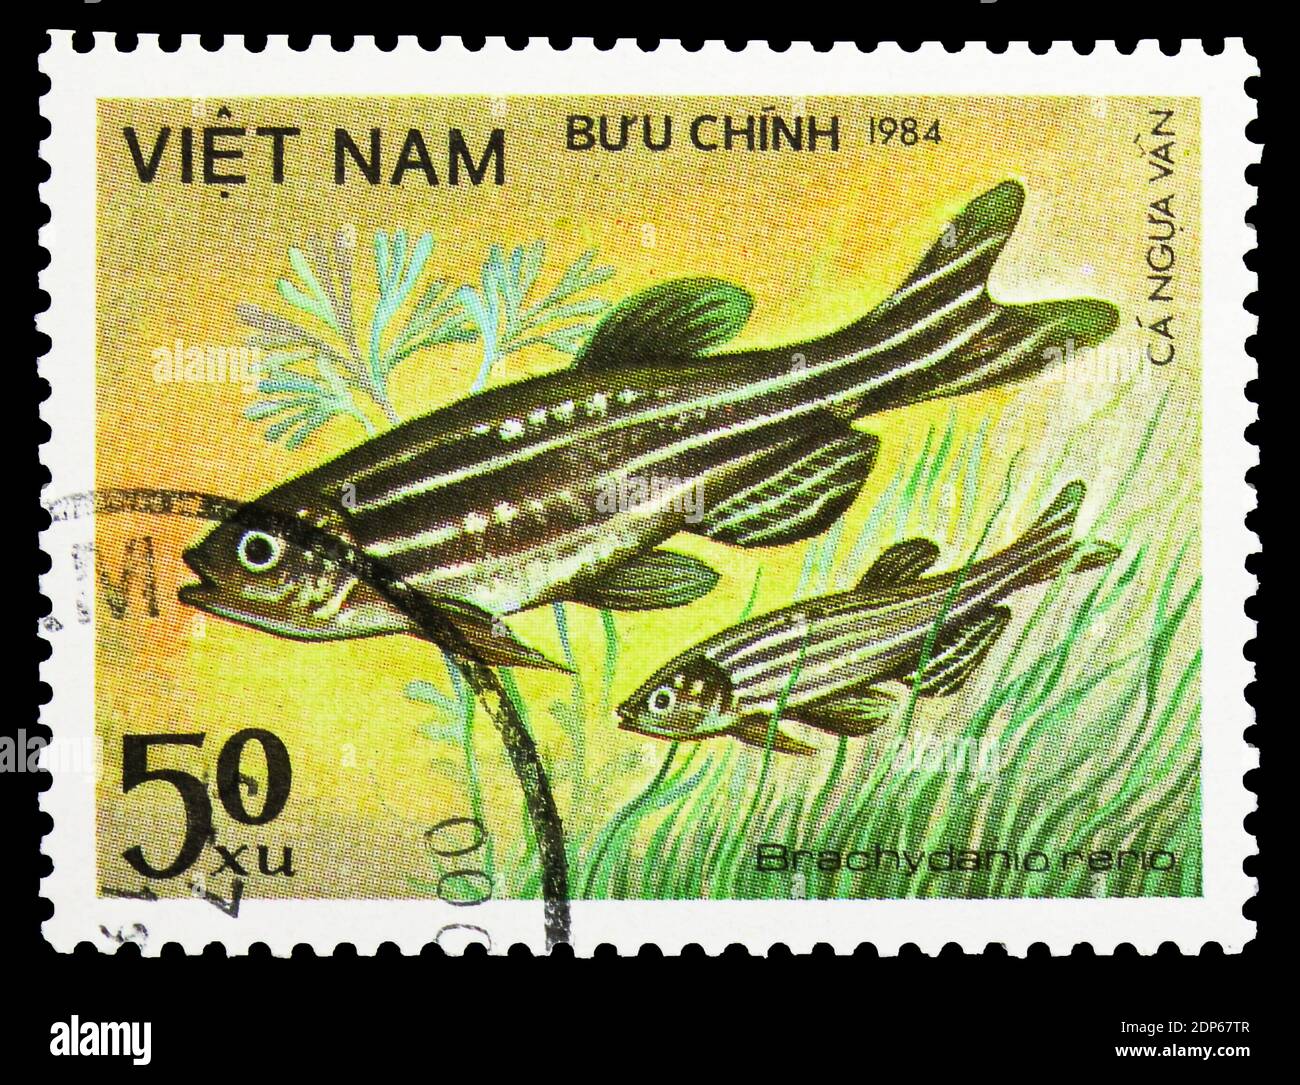 MOSCOW, RUSSIA - SEPTEMBER 26, 2018: A stamp printed in Vietnam shows Zebrafish (Brachydanio rerio), Fish - Ornamental serie, circa 1984 Stock Photo